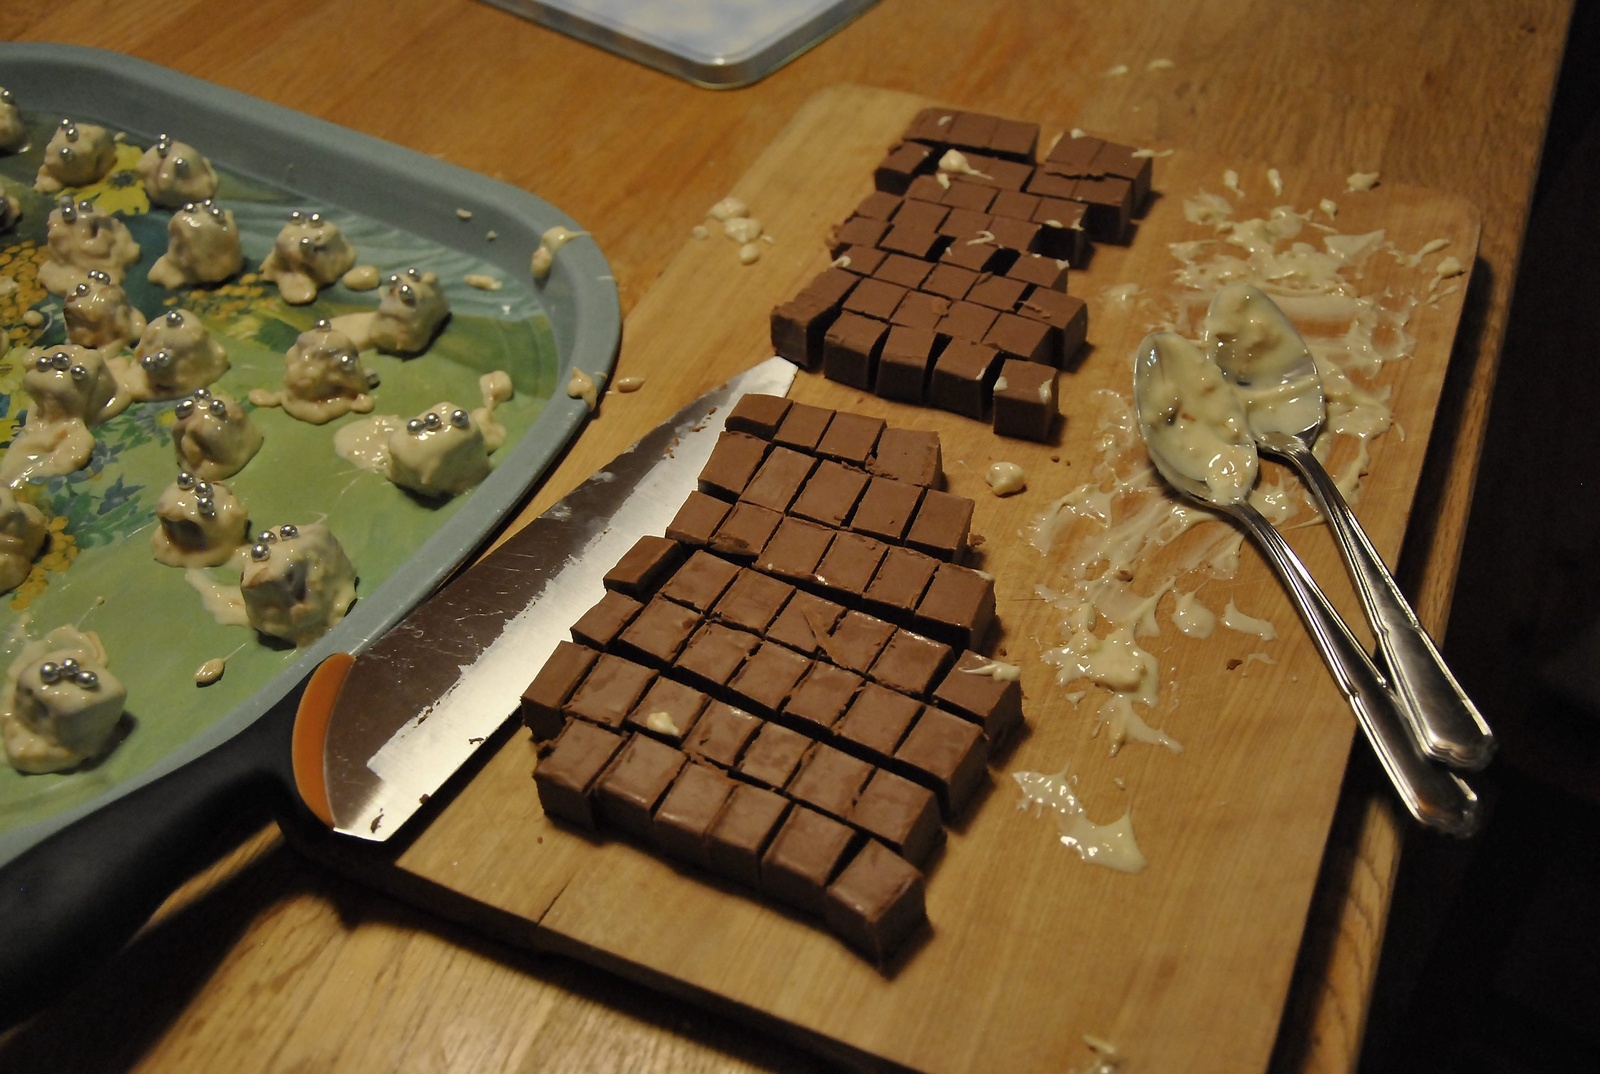 Nougaten doppas i vit choklad med cornflakes.
Foto: Marie Strömberg Andersson